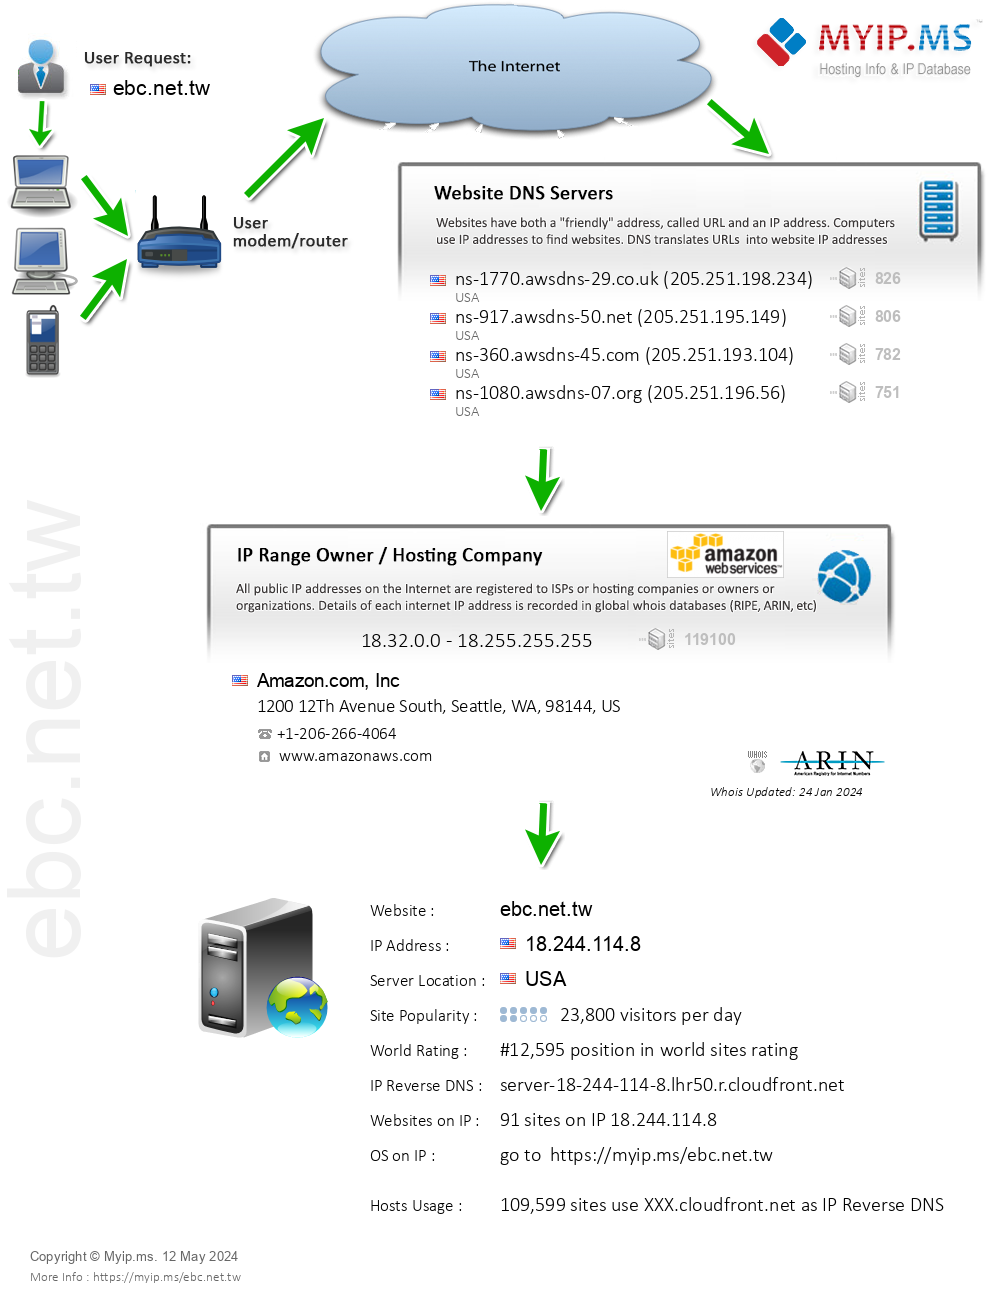 Ebc.net.tw - Website Hosting Visual IP Diagram